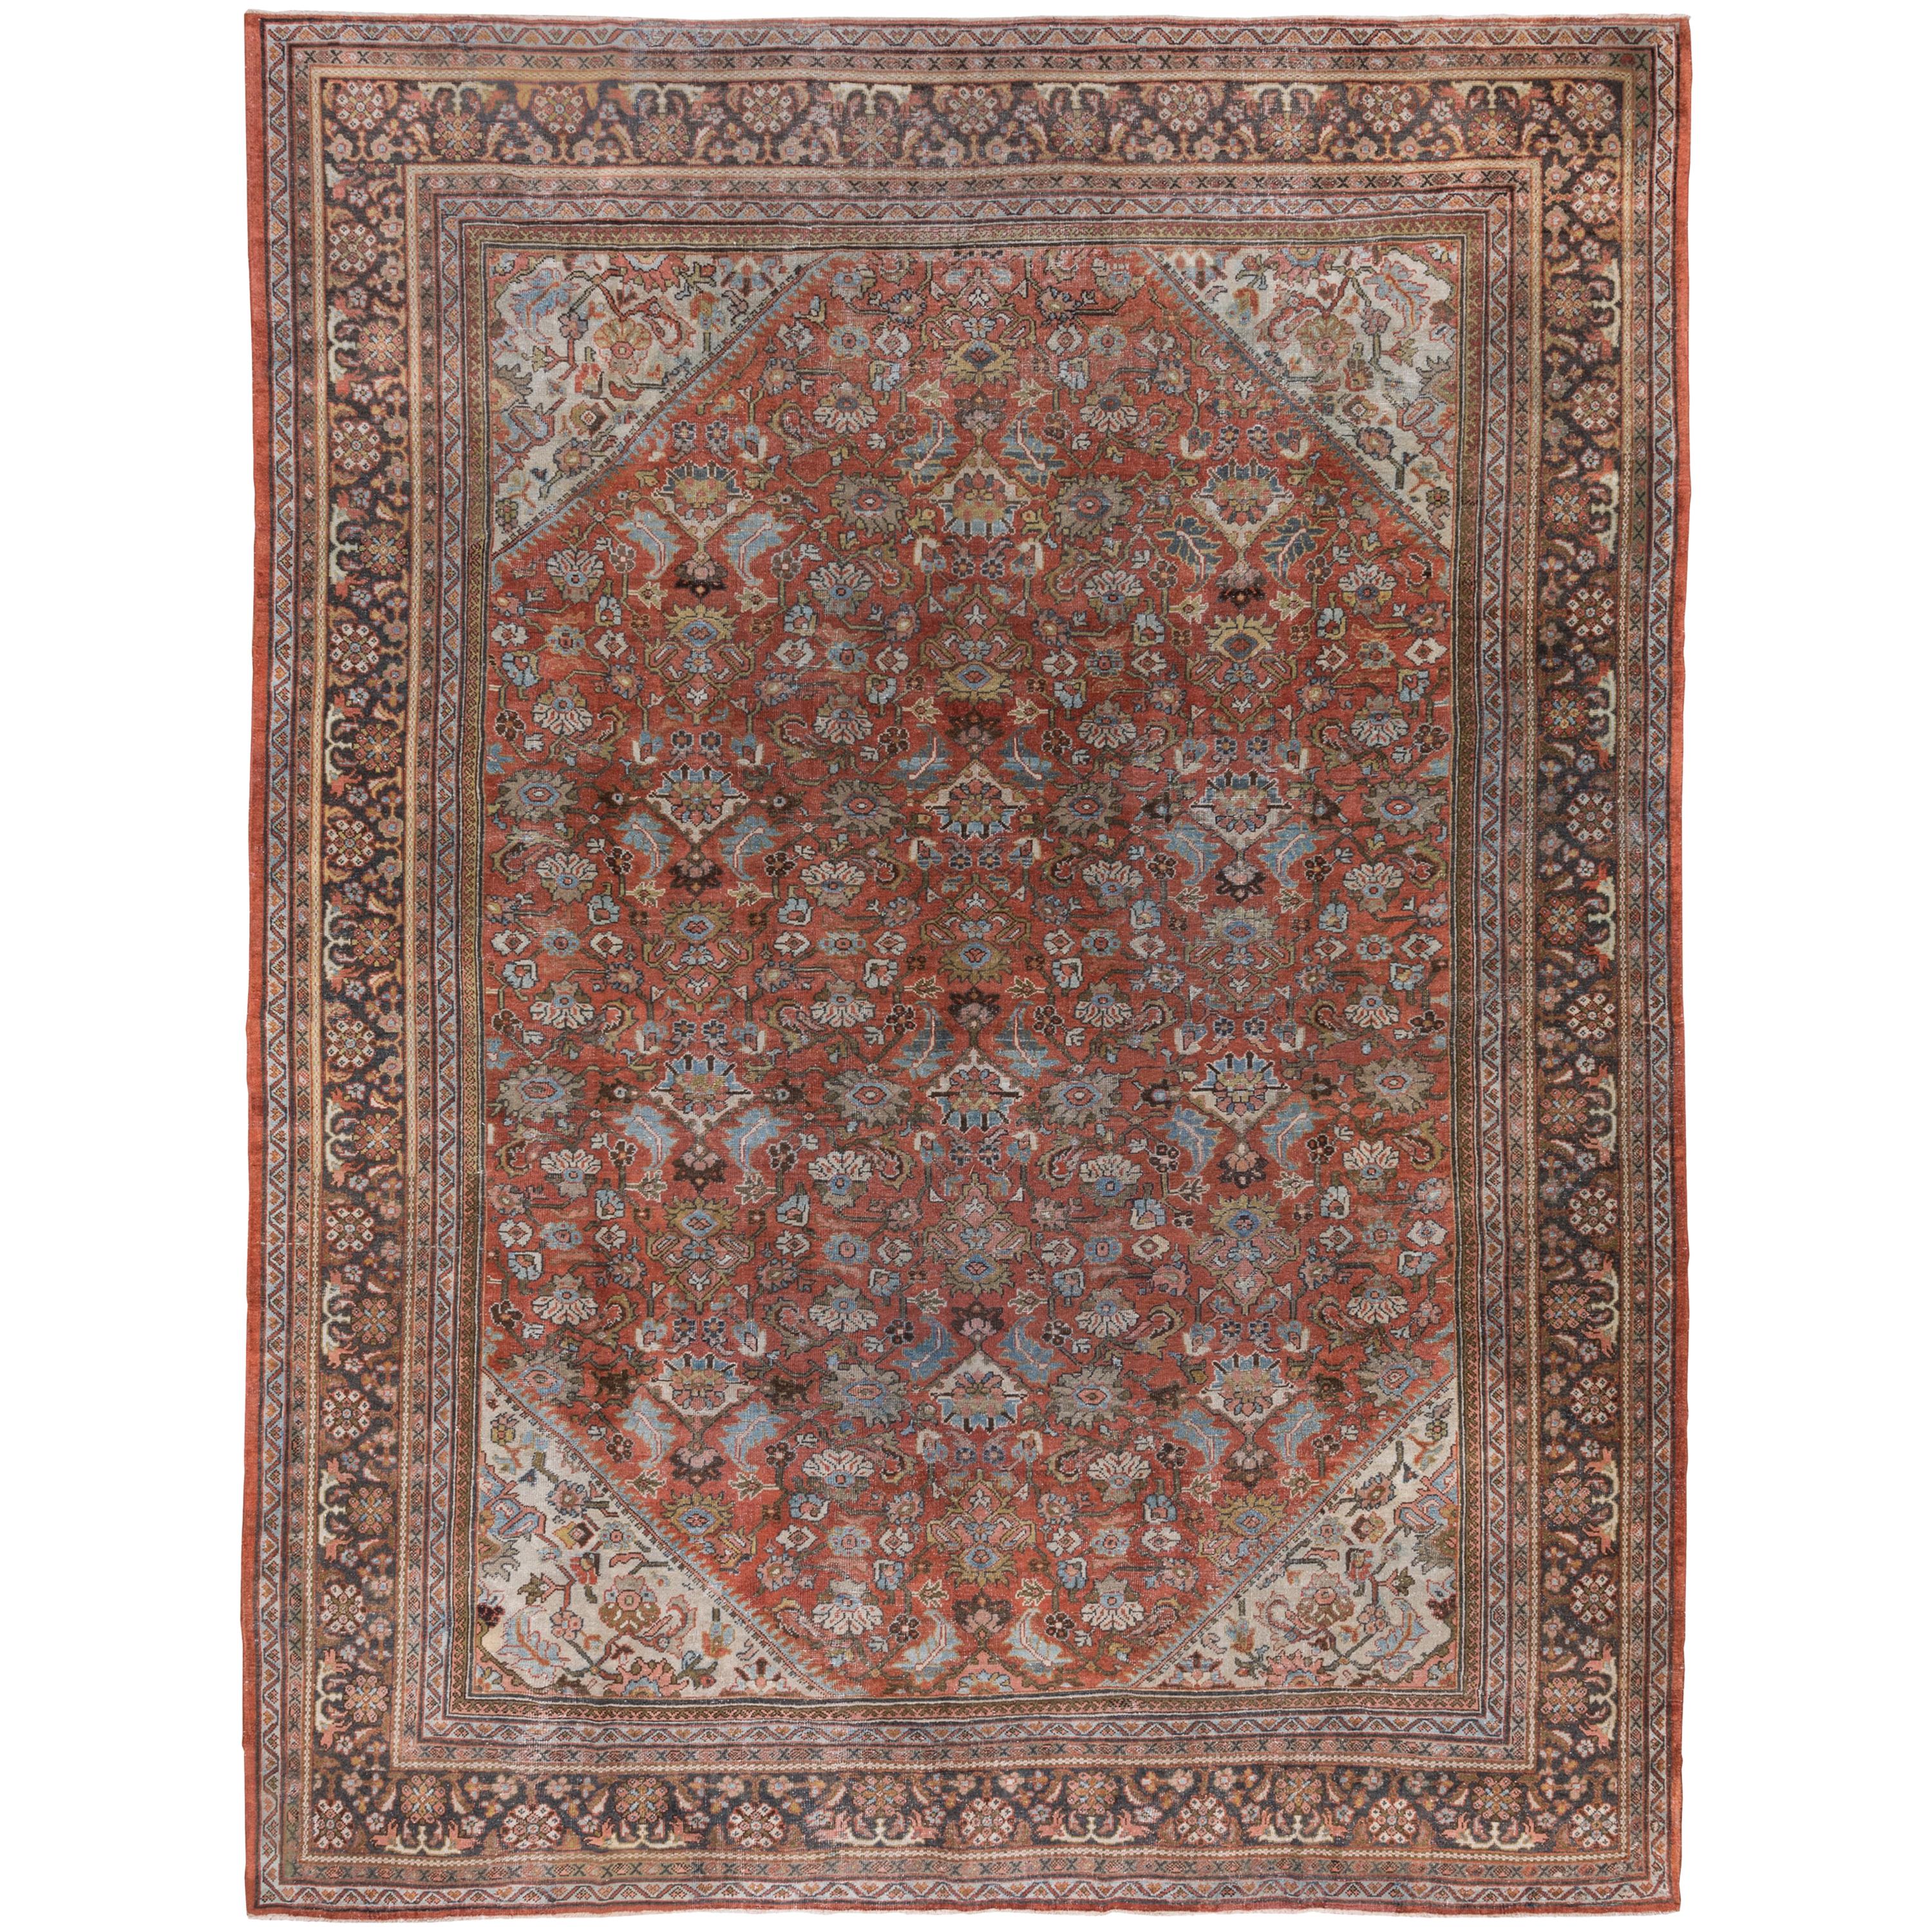 Antique Persian Mahal Carpet, Circa 1920s